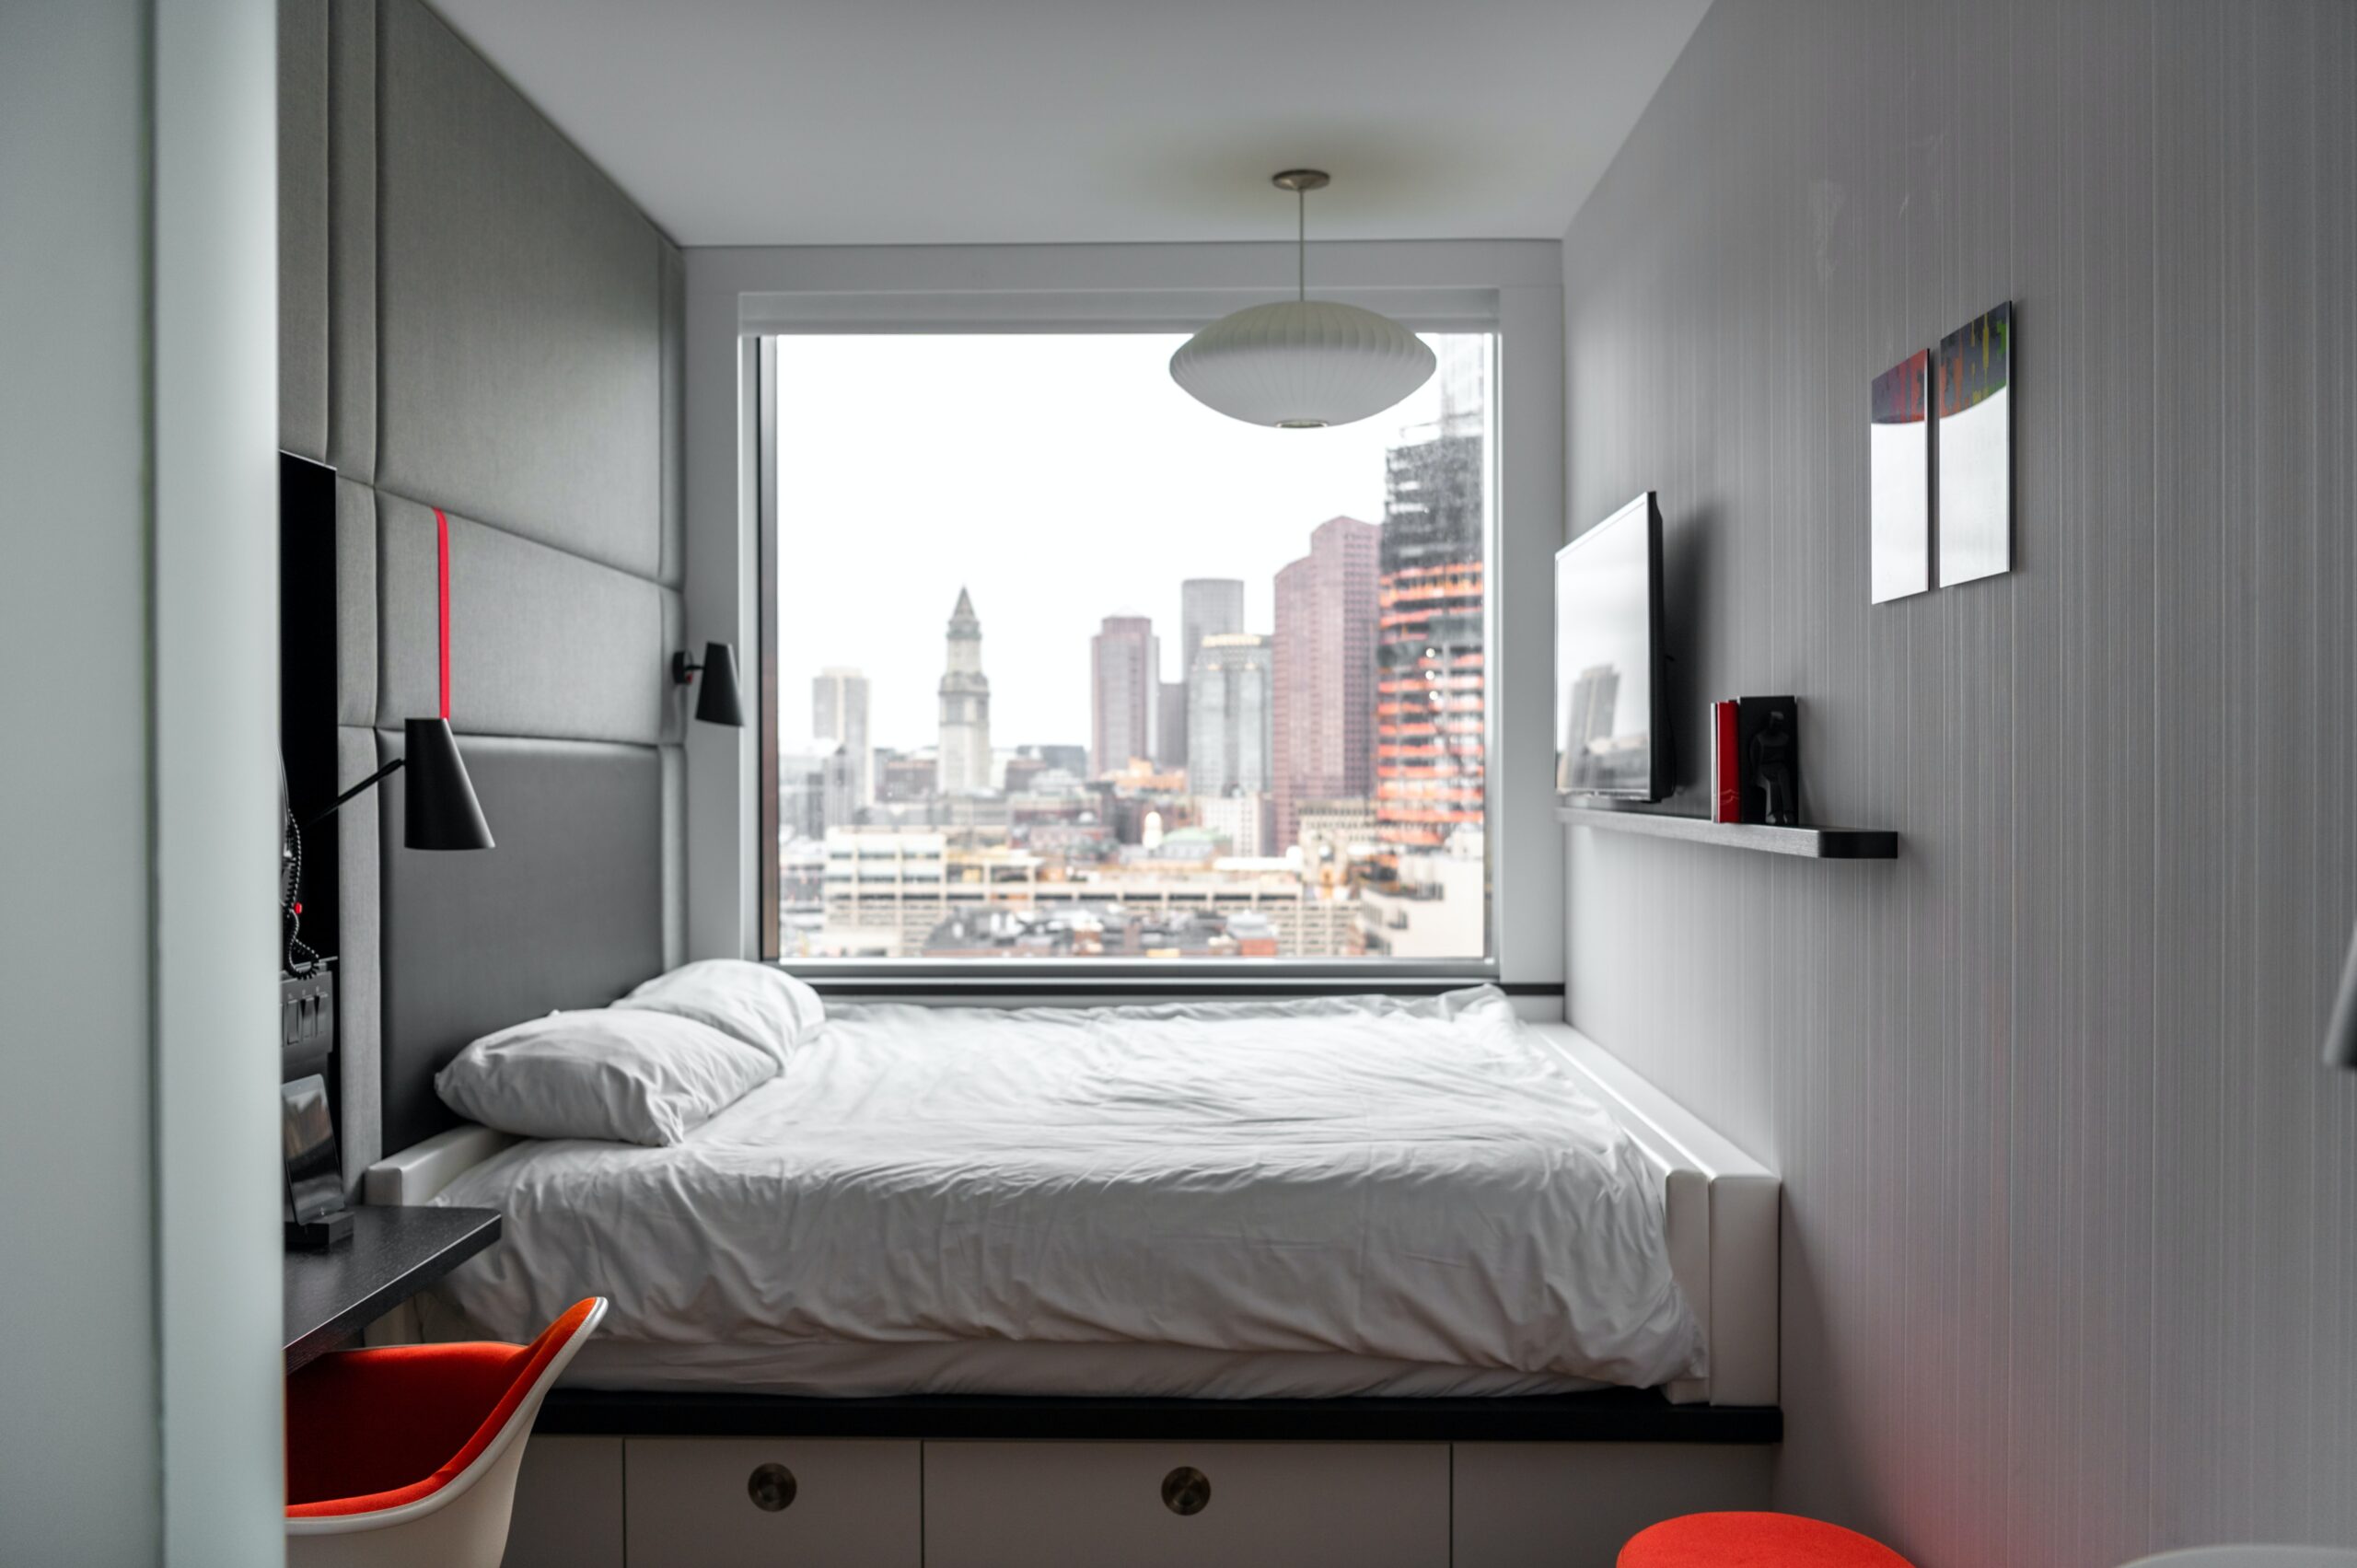 Airbnb bed near window